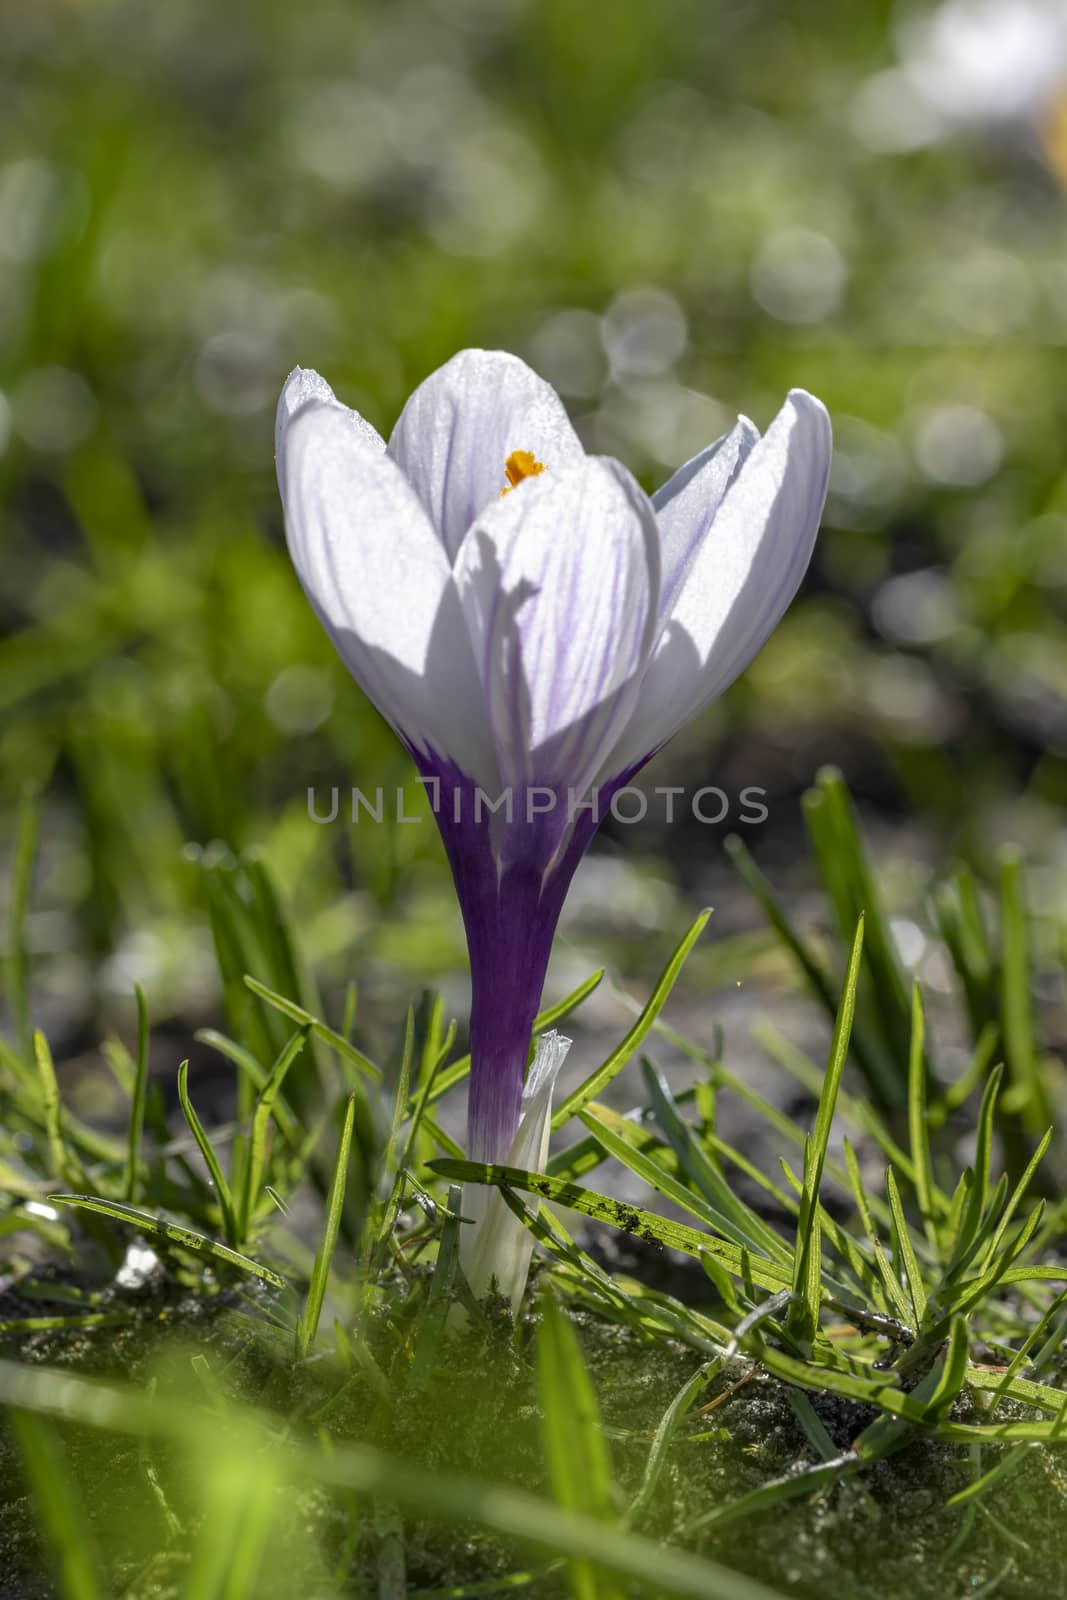 Closeup of a white and purple crocus flower against a blur soil color background